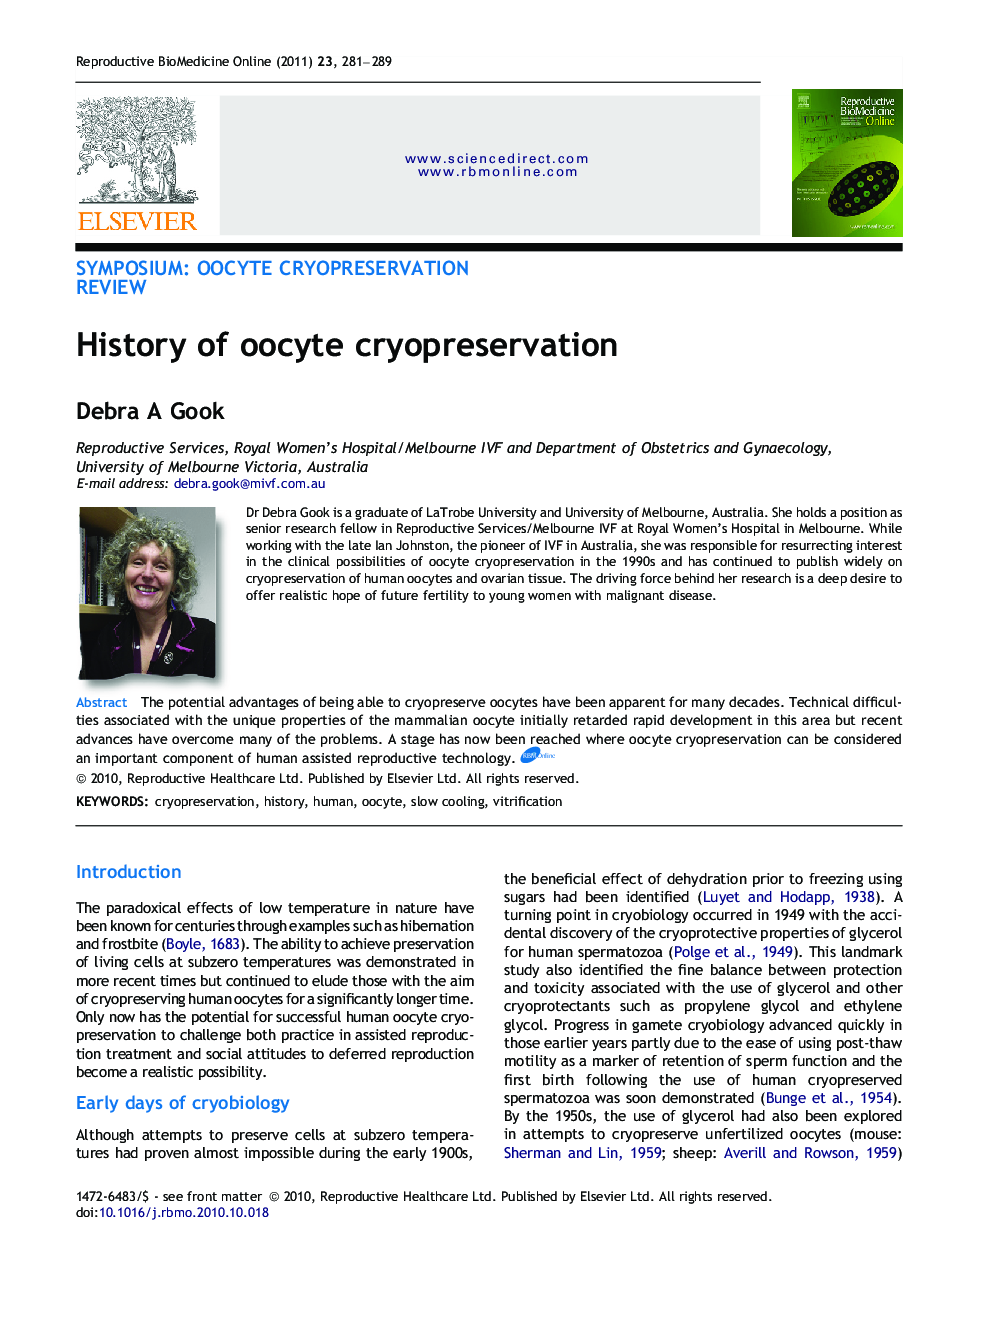 History of oocyte cryopreservation 